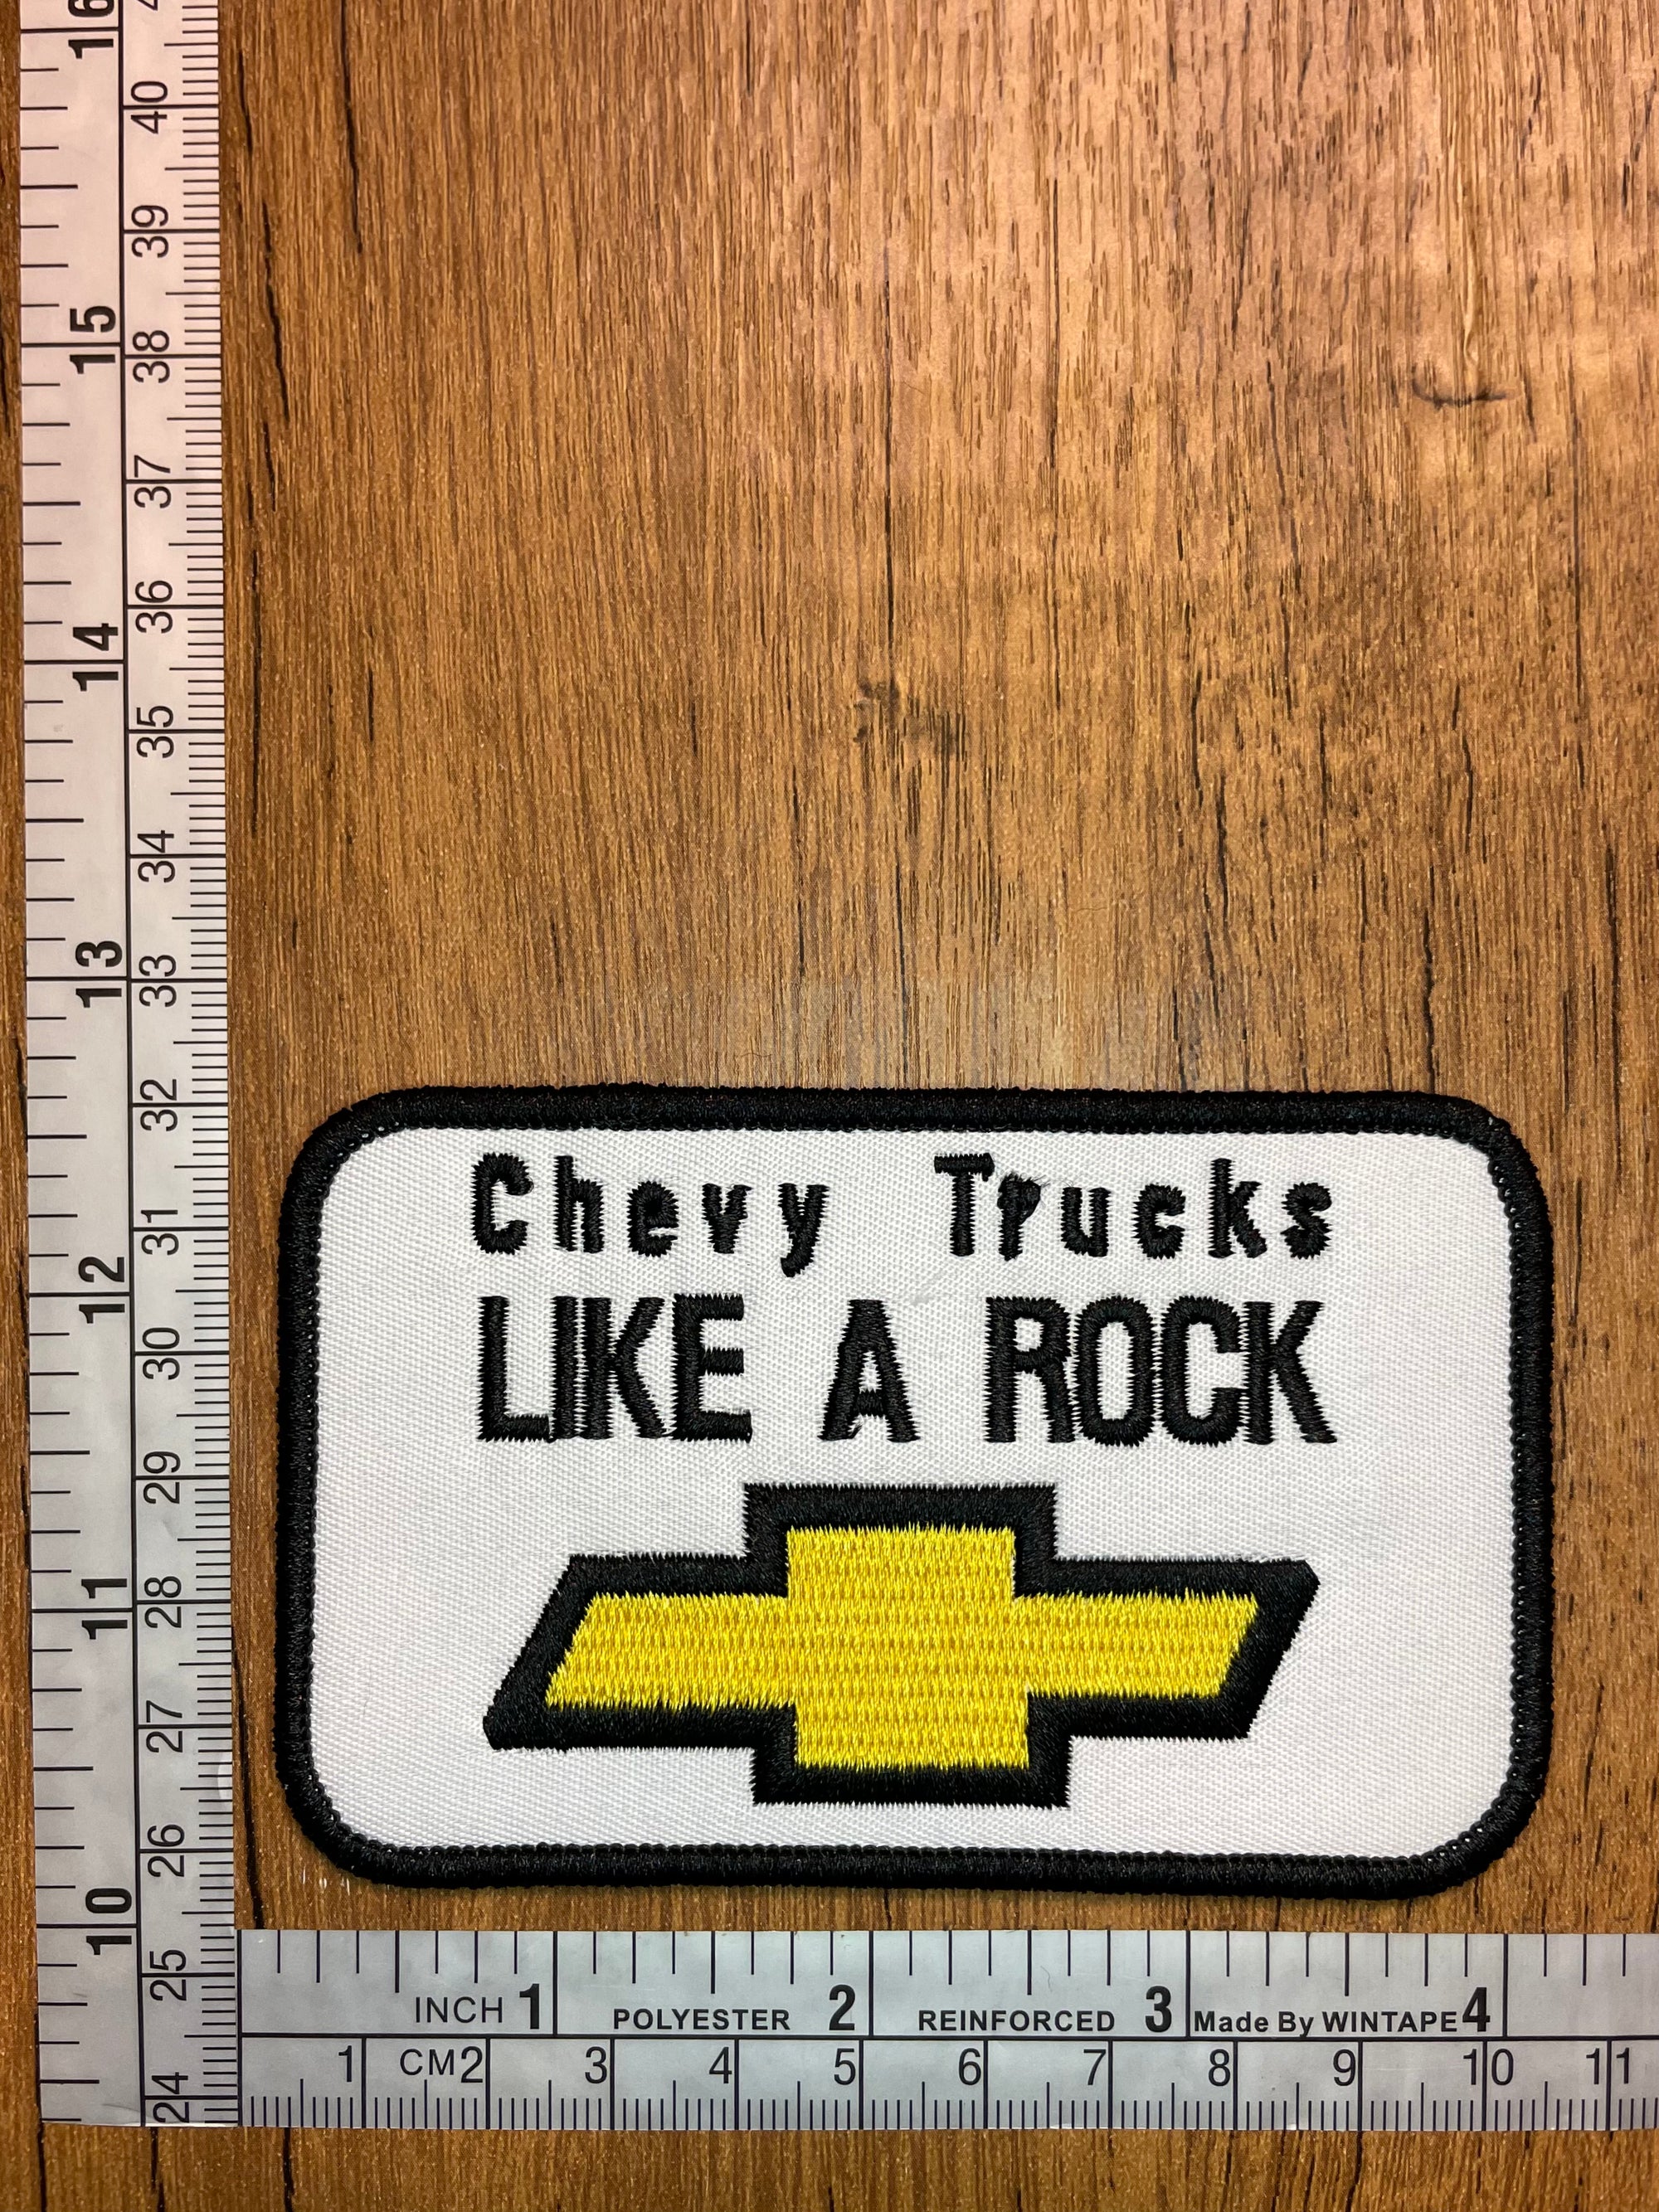 Chevy Trucks Like A Rock